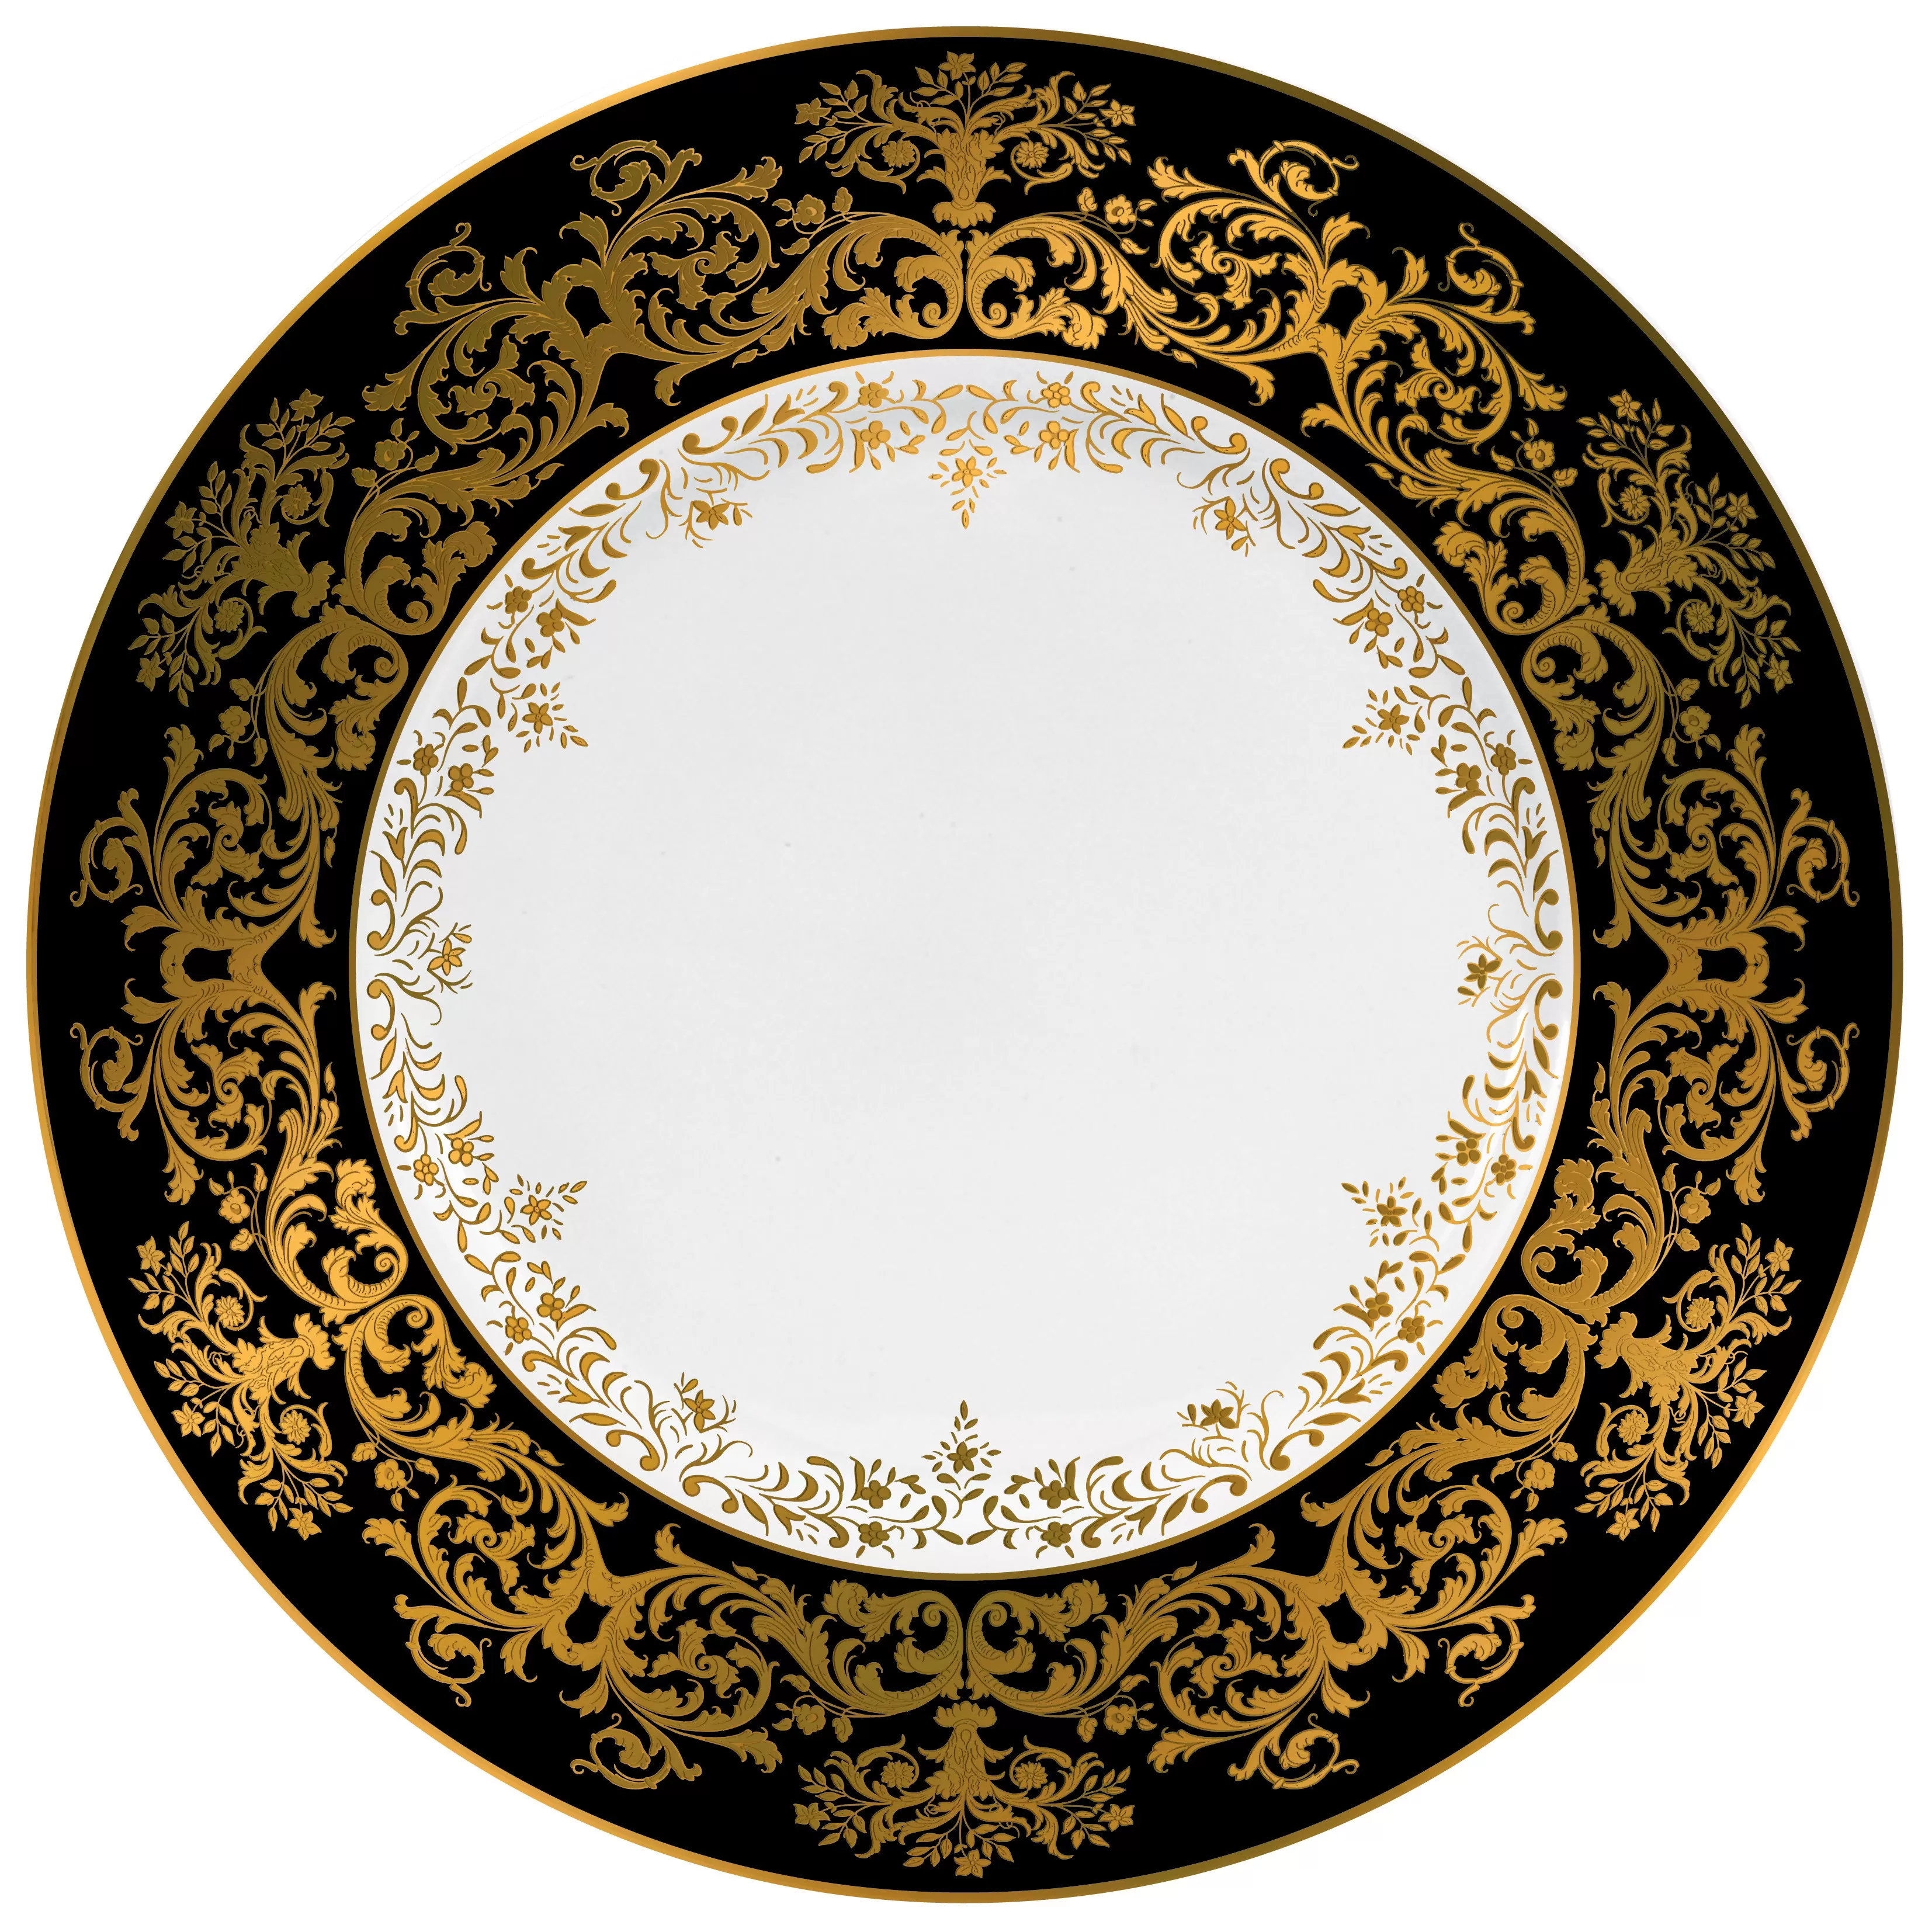 Raynaud Marignan Or/GoldBlack Oval platter 16.1417 x 11.811 in